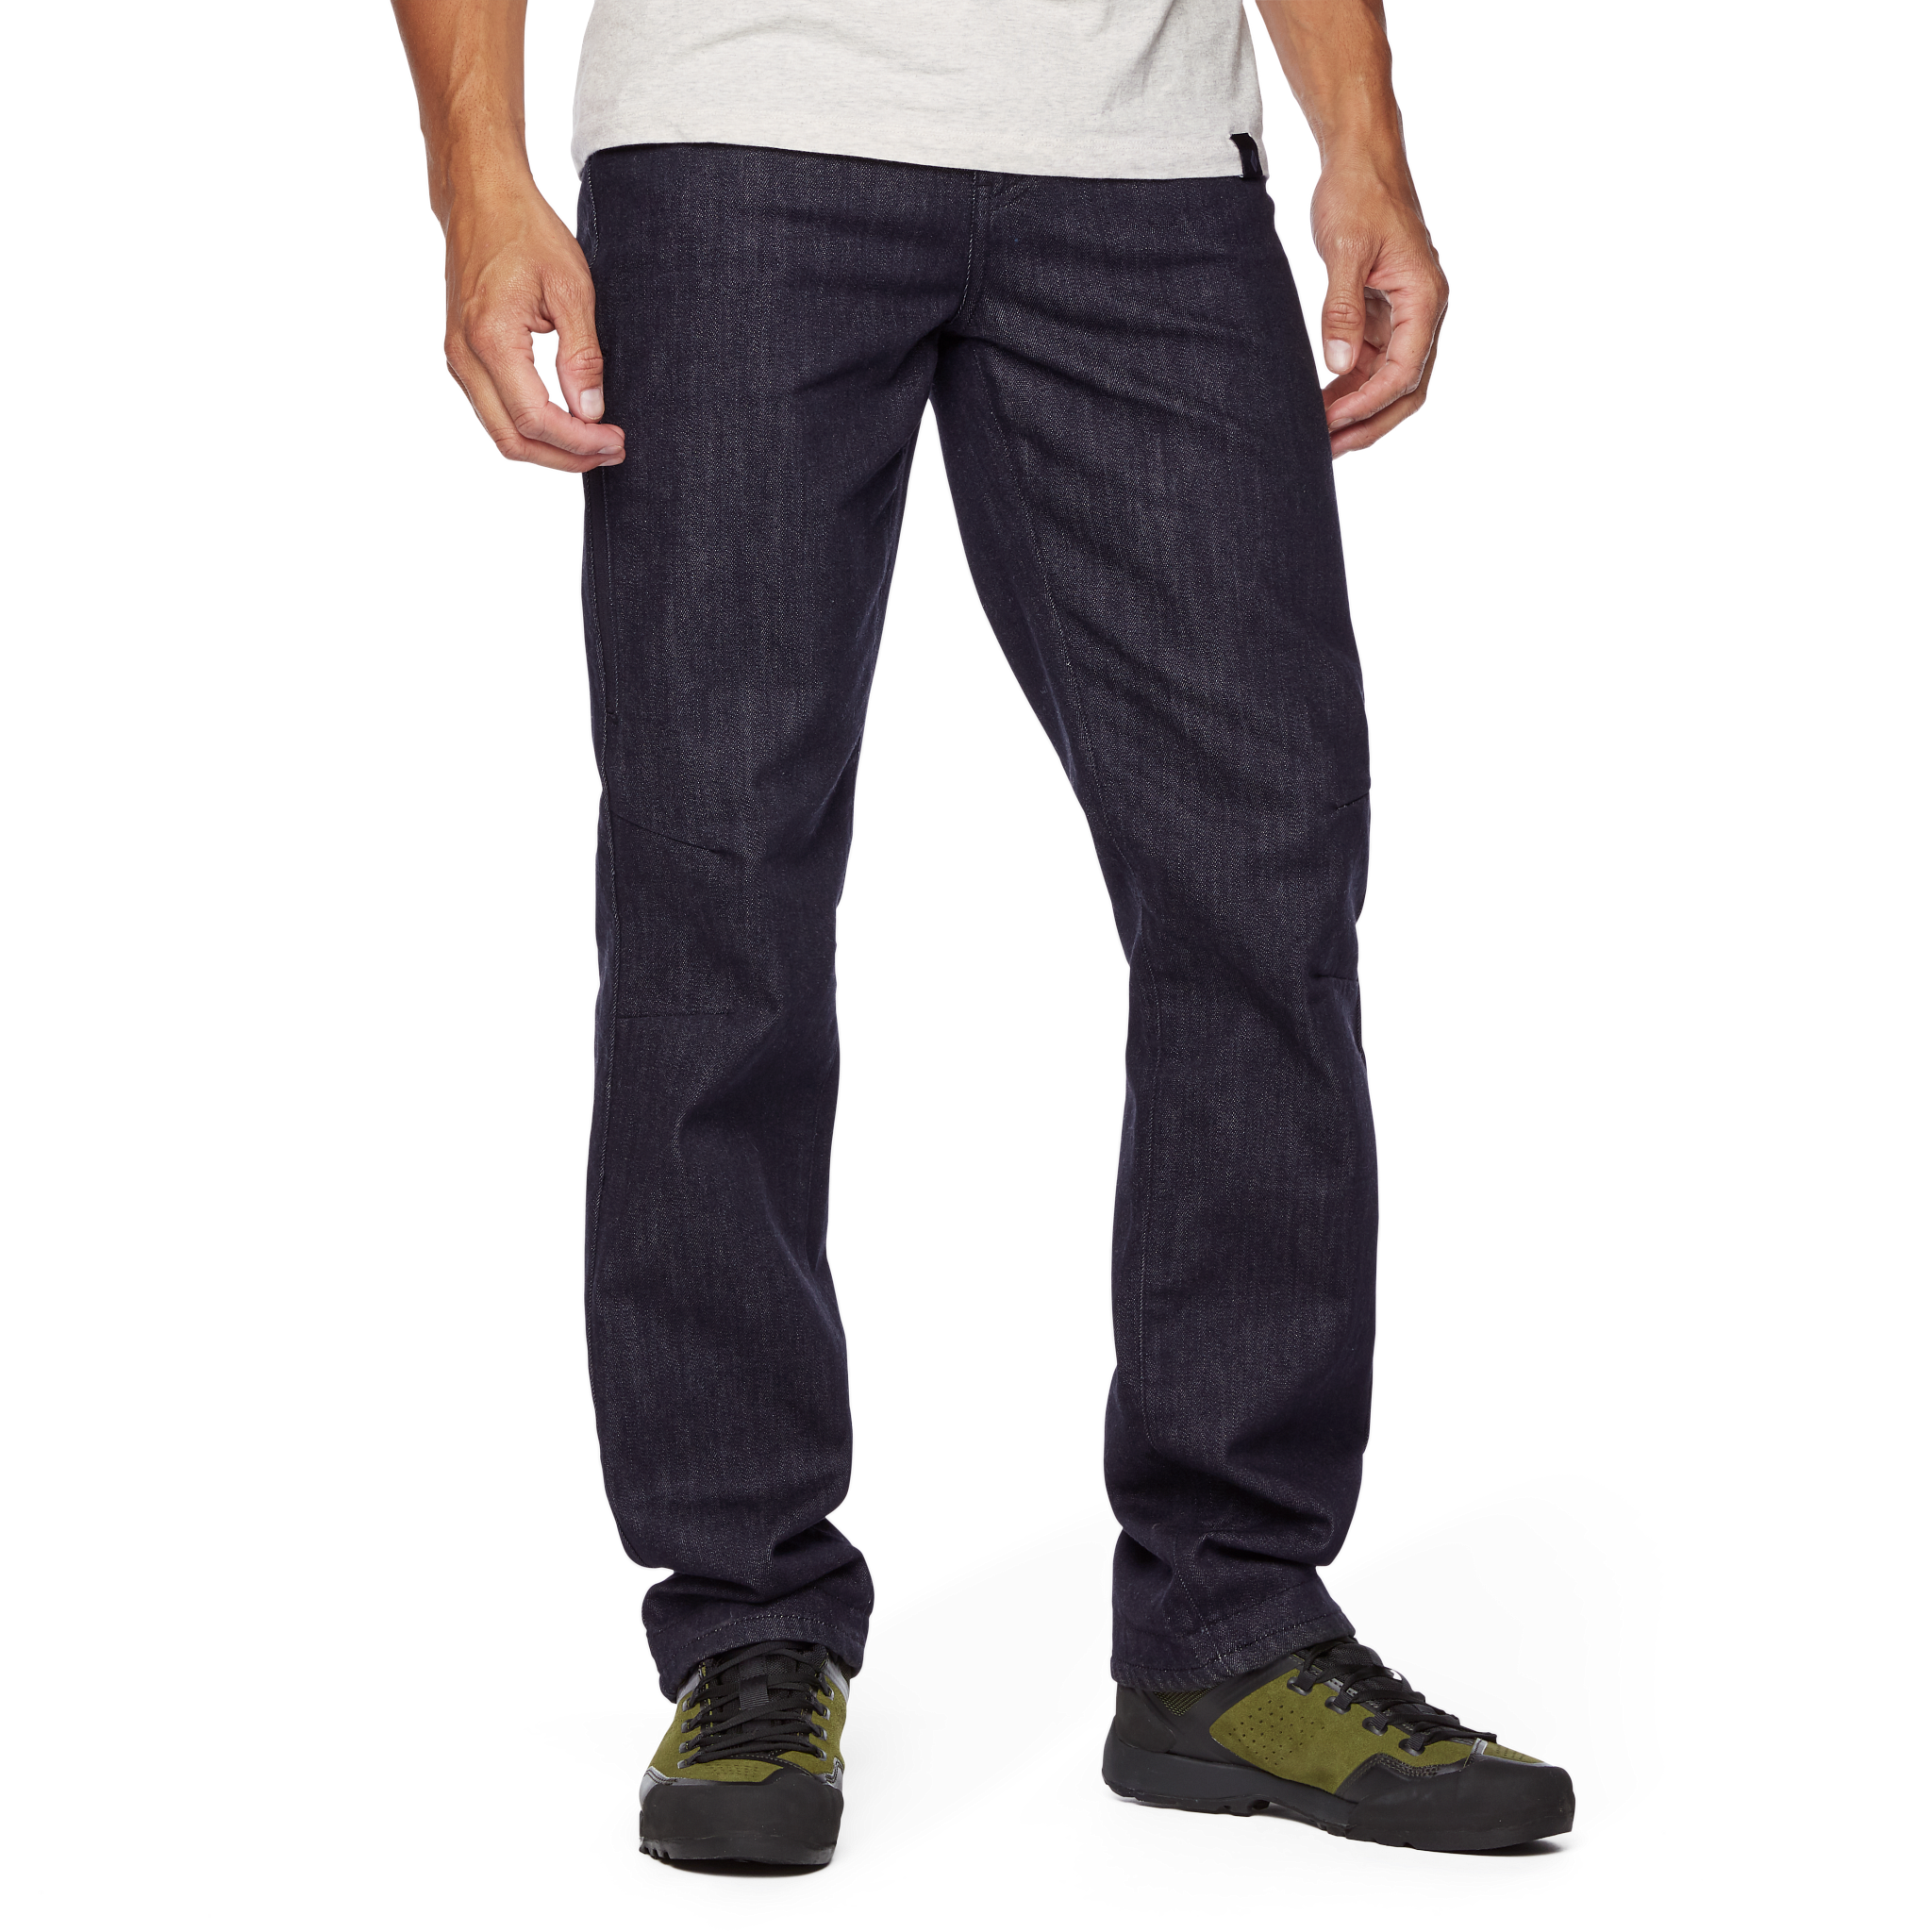 Black Diamond Equipment Men's Mission Wool Denim Pants Size 34, in Dark Grey